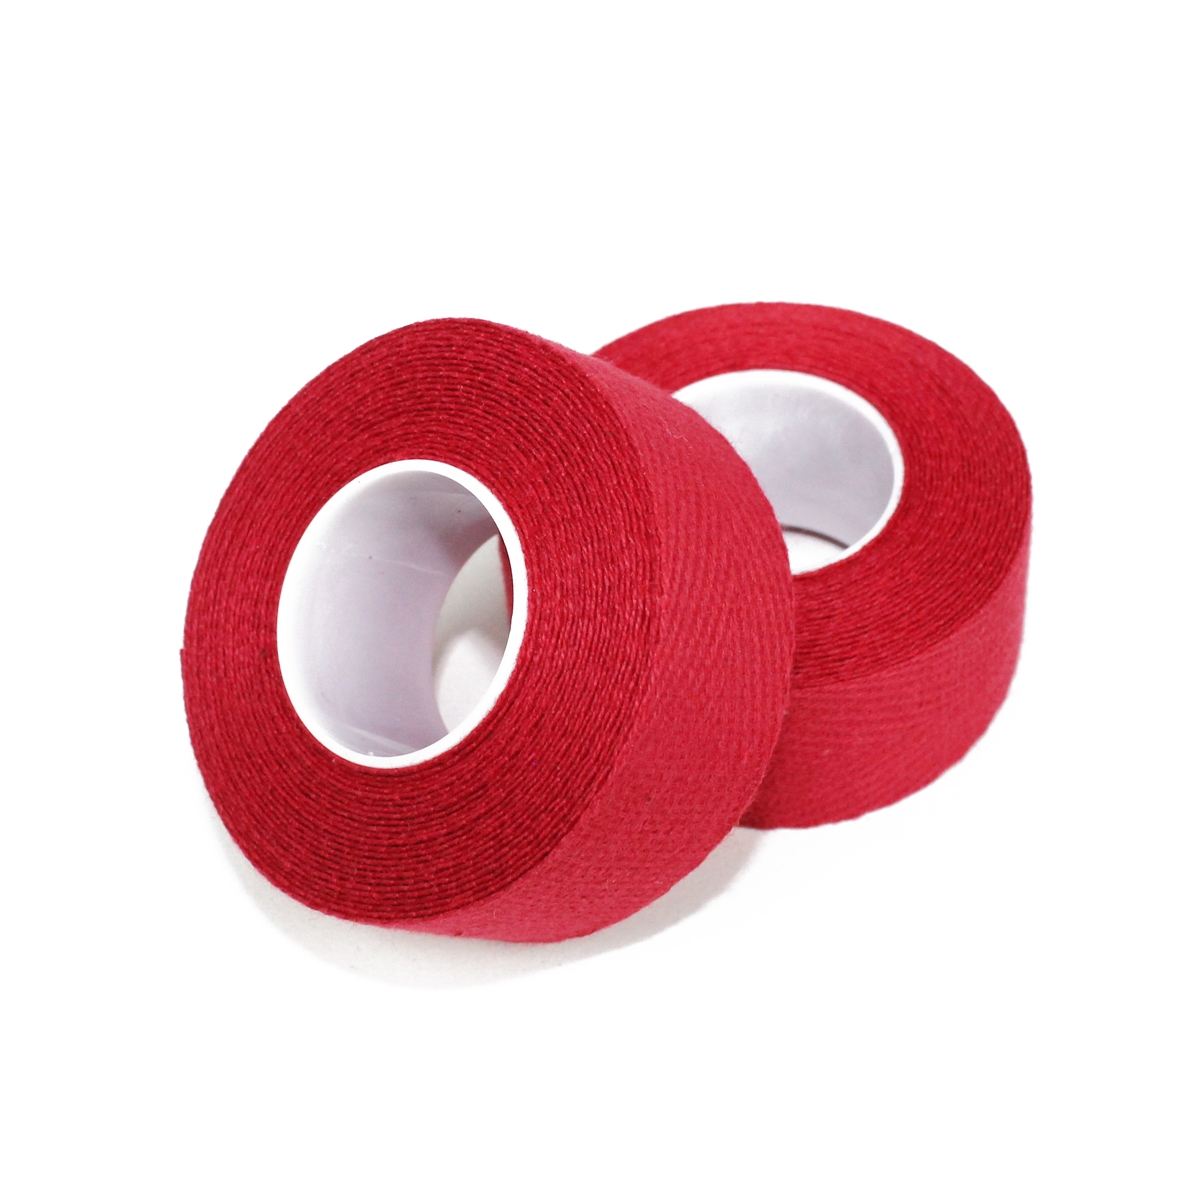 Pair cotton vintage retrò handlebar tape red